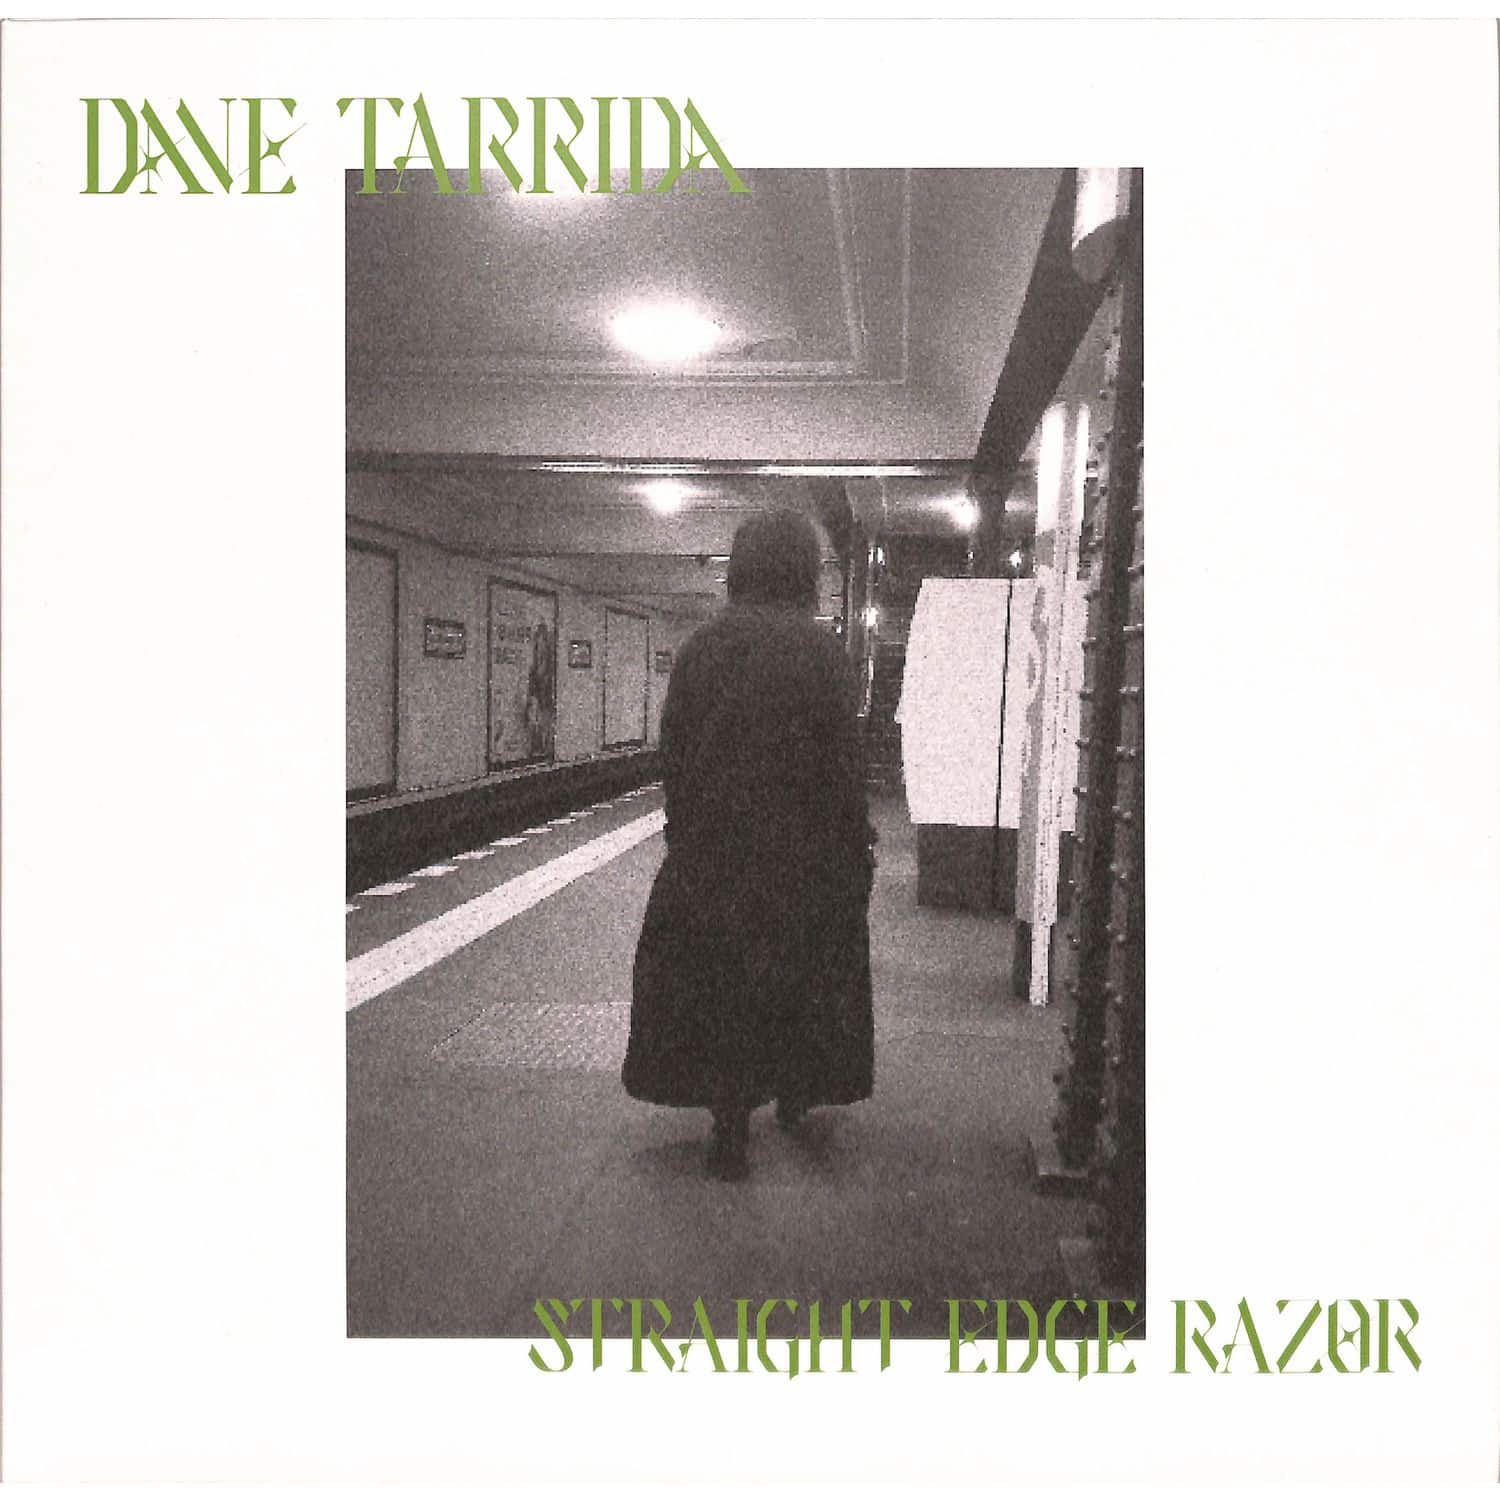 Dave Tarrida - STRAIGHT EDGE RAZOR